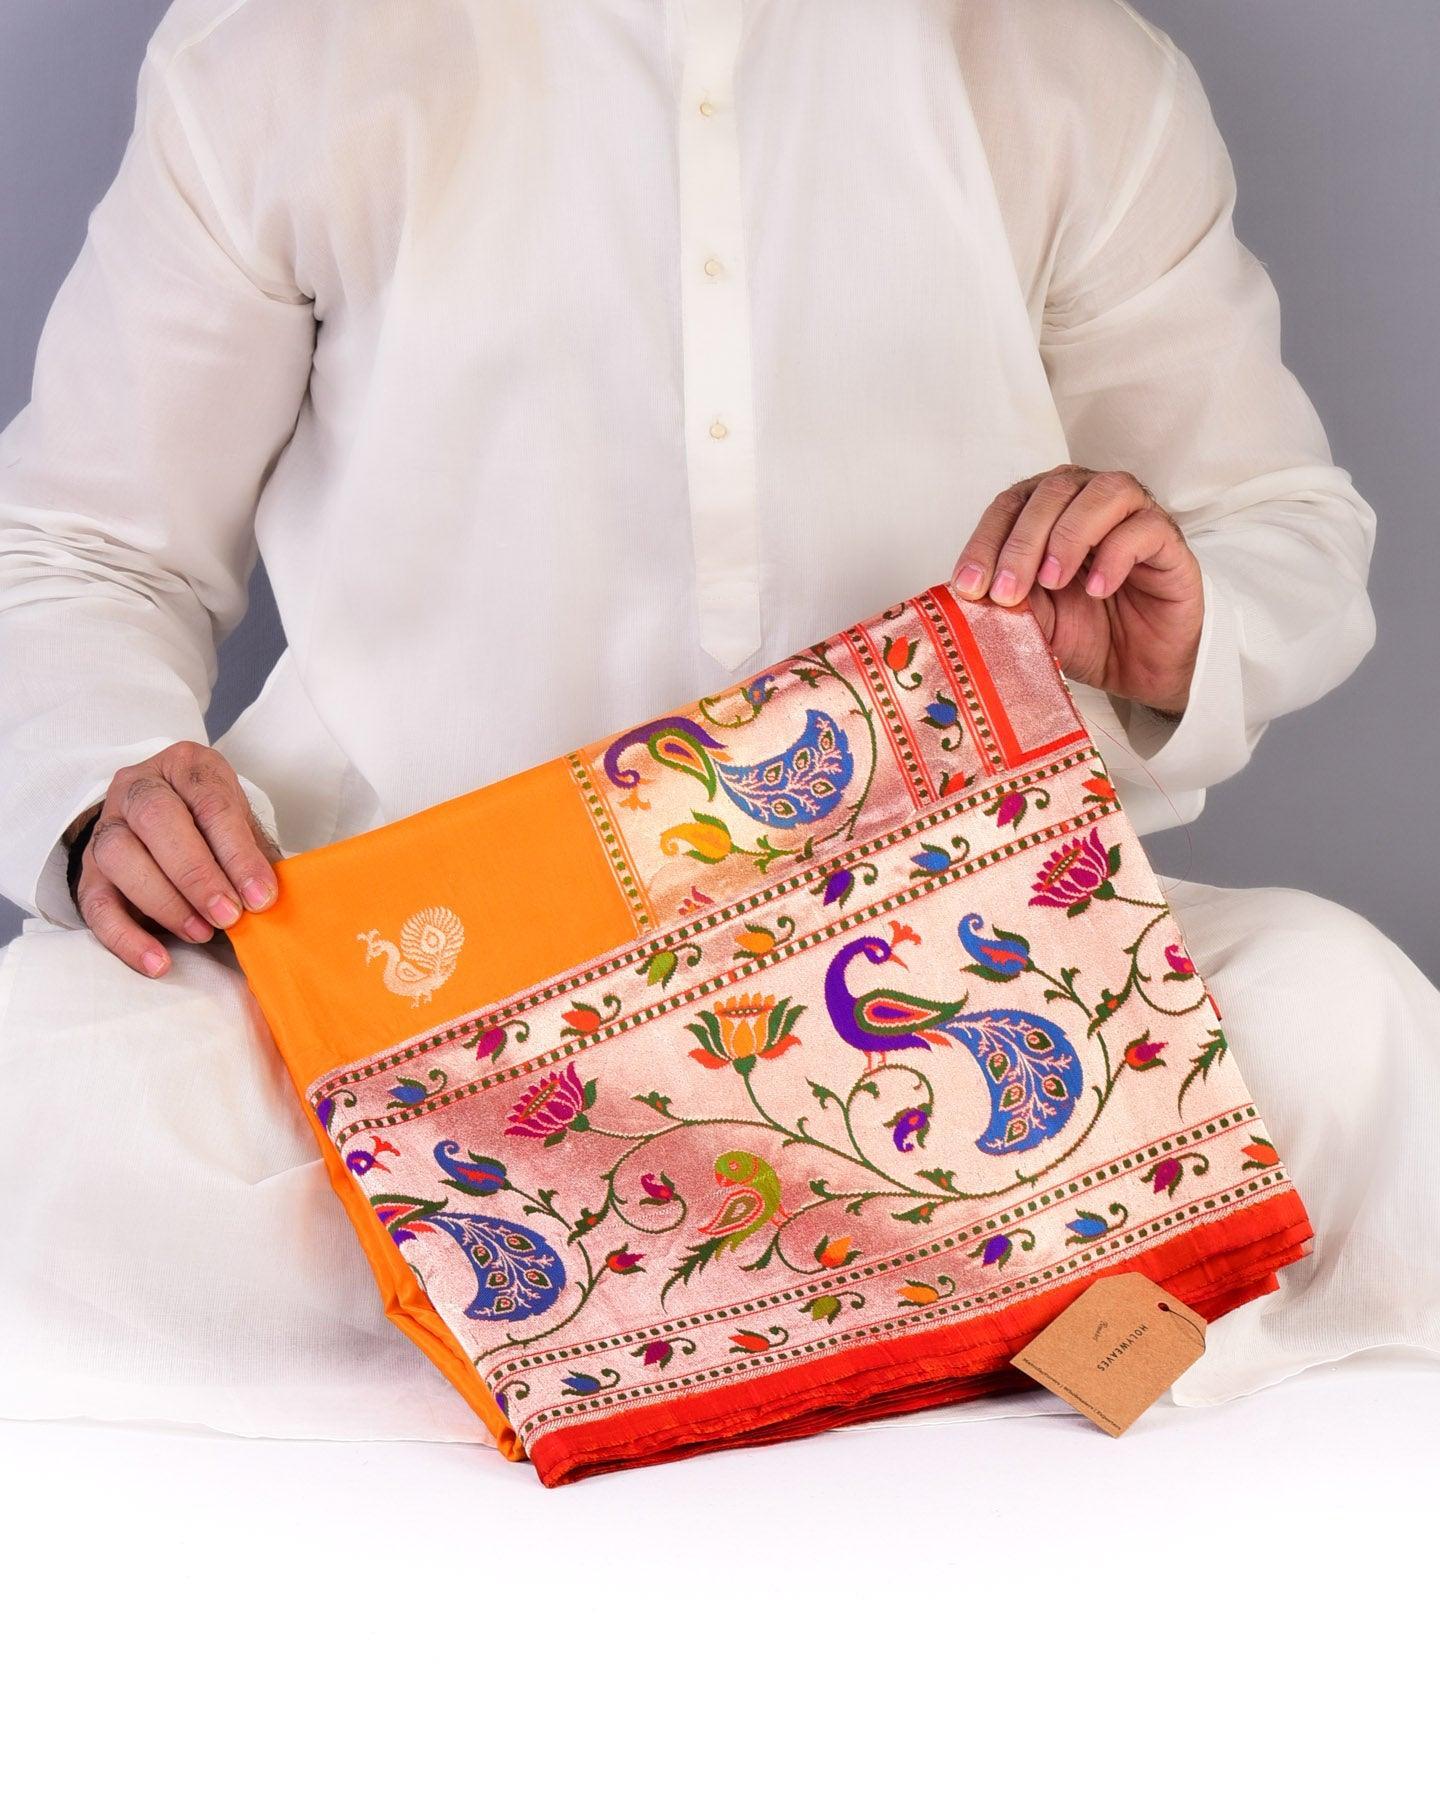 Orange Banarasi Paudi Chauhari Paithani Handwoven Katan Silk Saree - By HolyWeaves, Benares